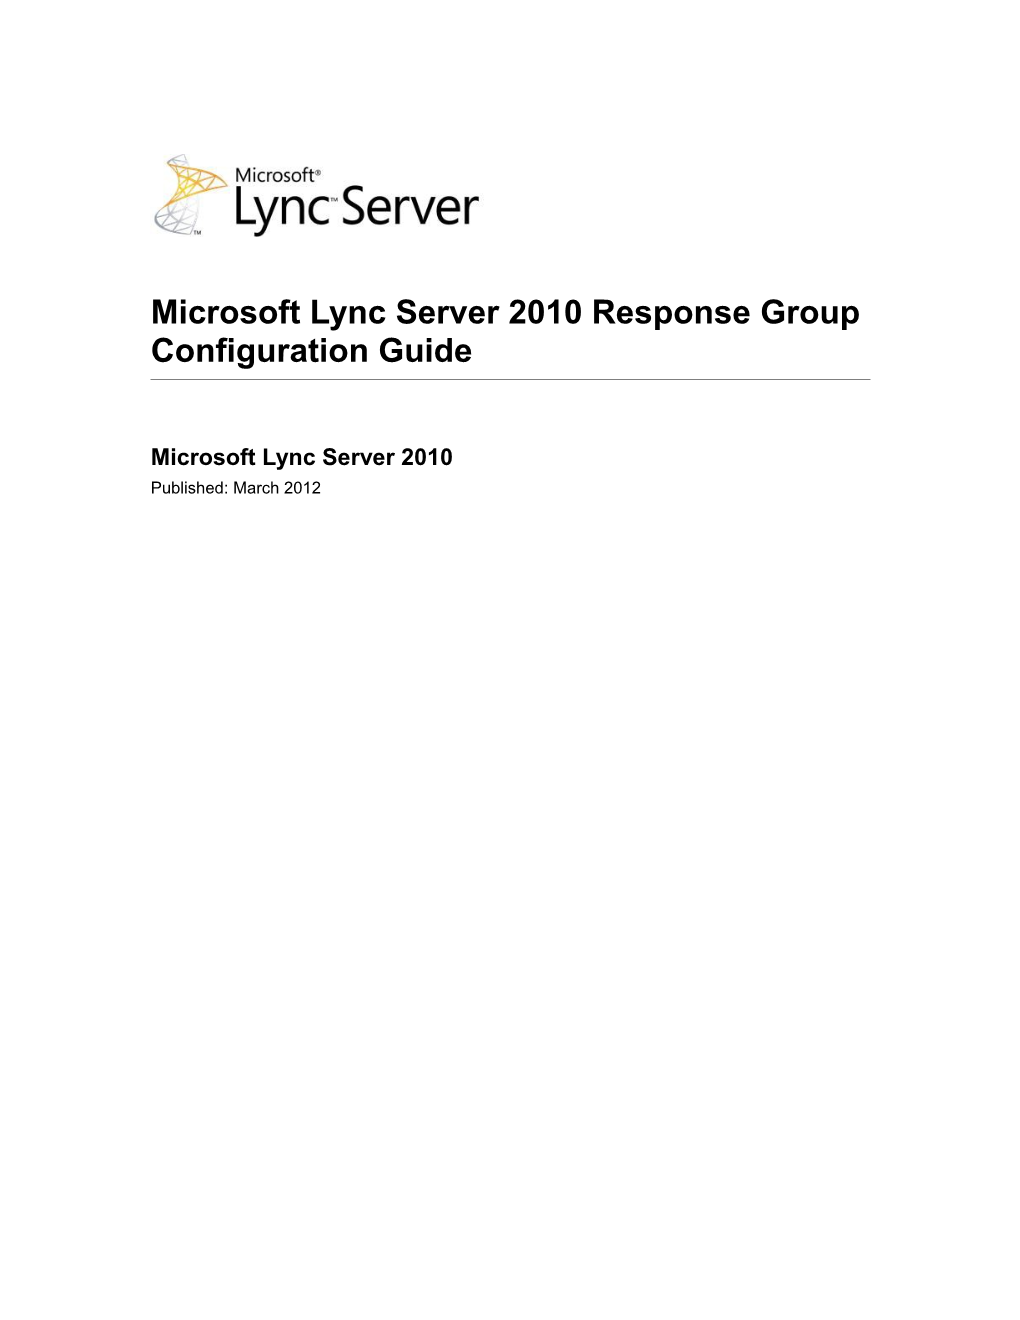 Microsoft Lync Server 2010 Response Group Configuration Guide